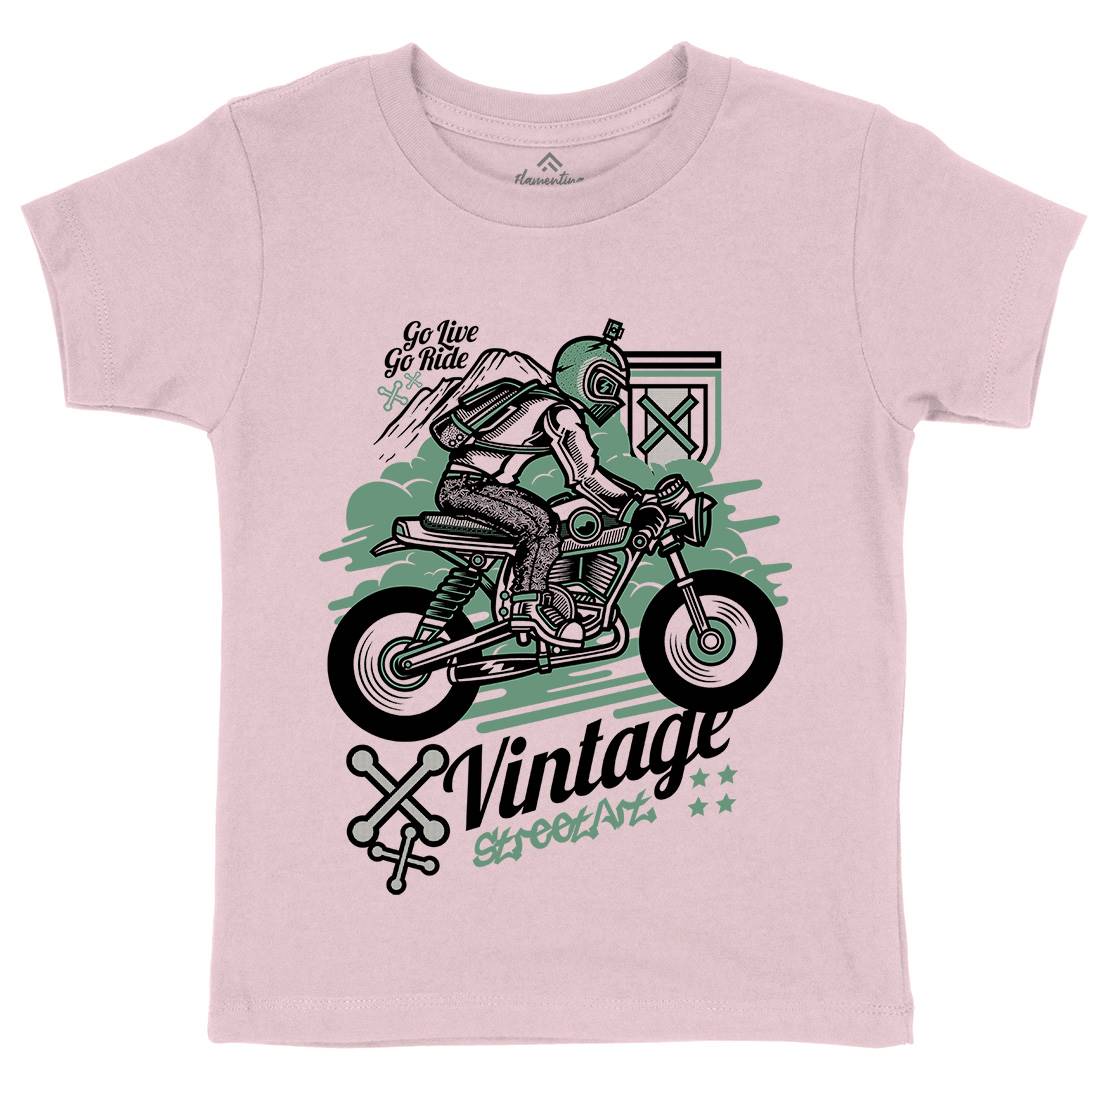 Vintage Rider Kids Crew Neck T-Shirt Motorcycles D872